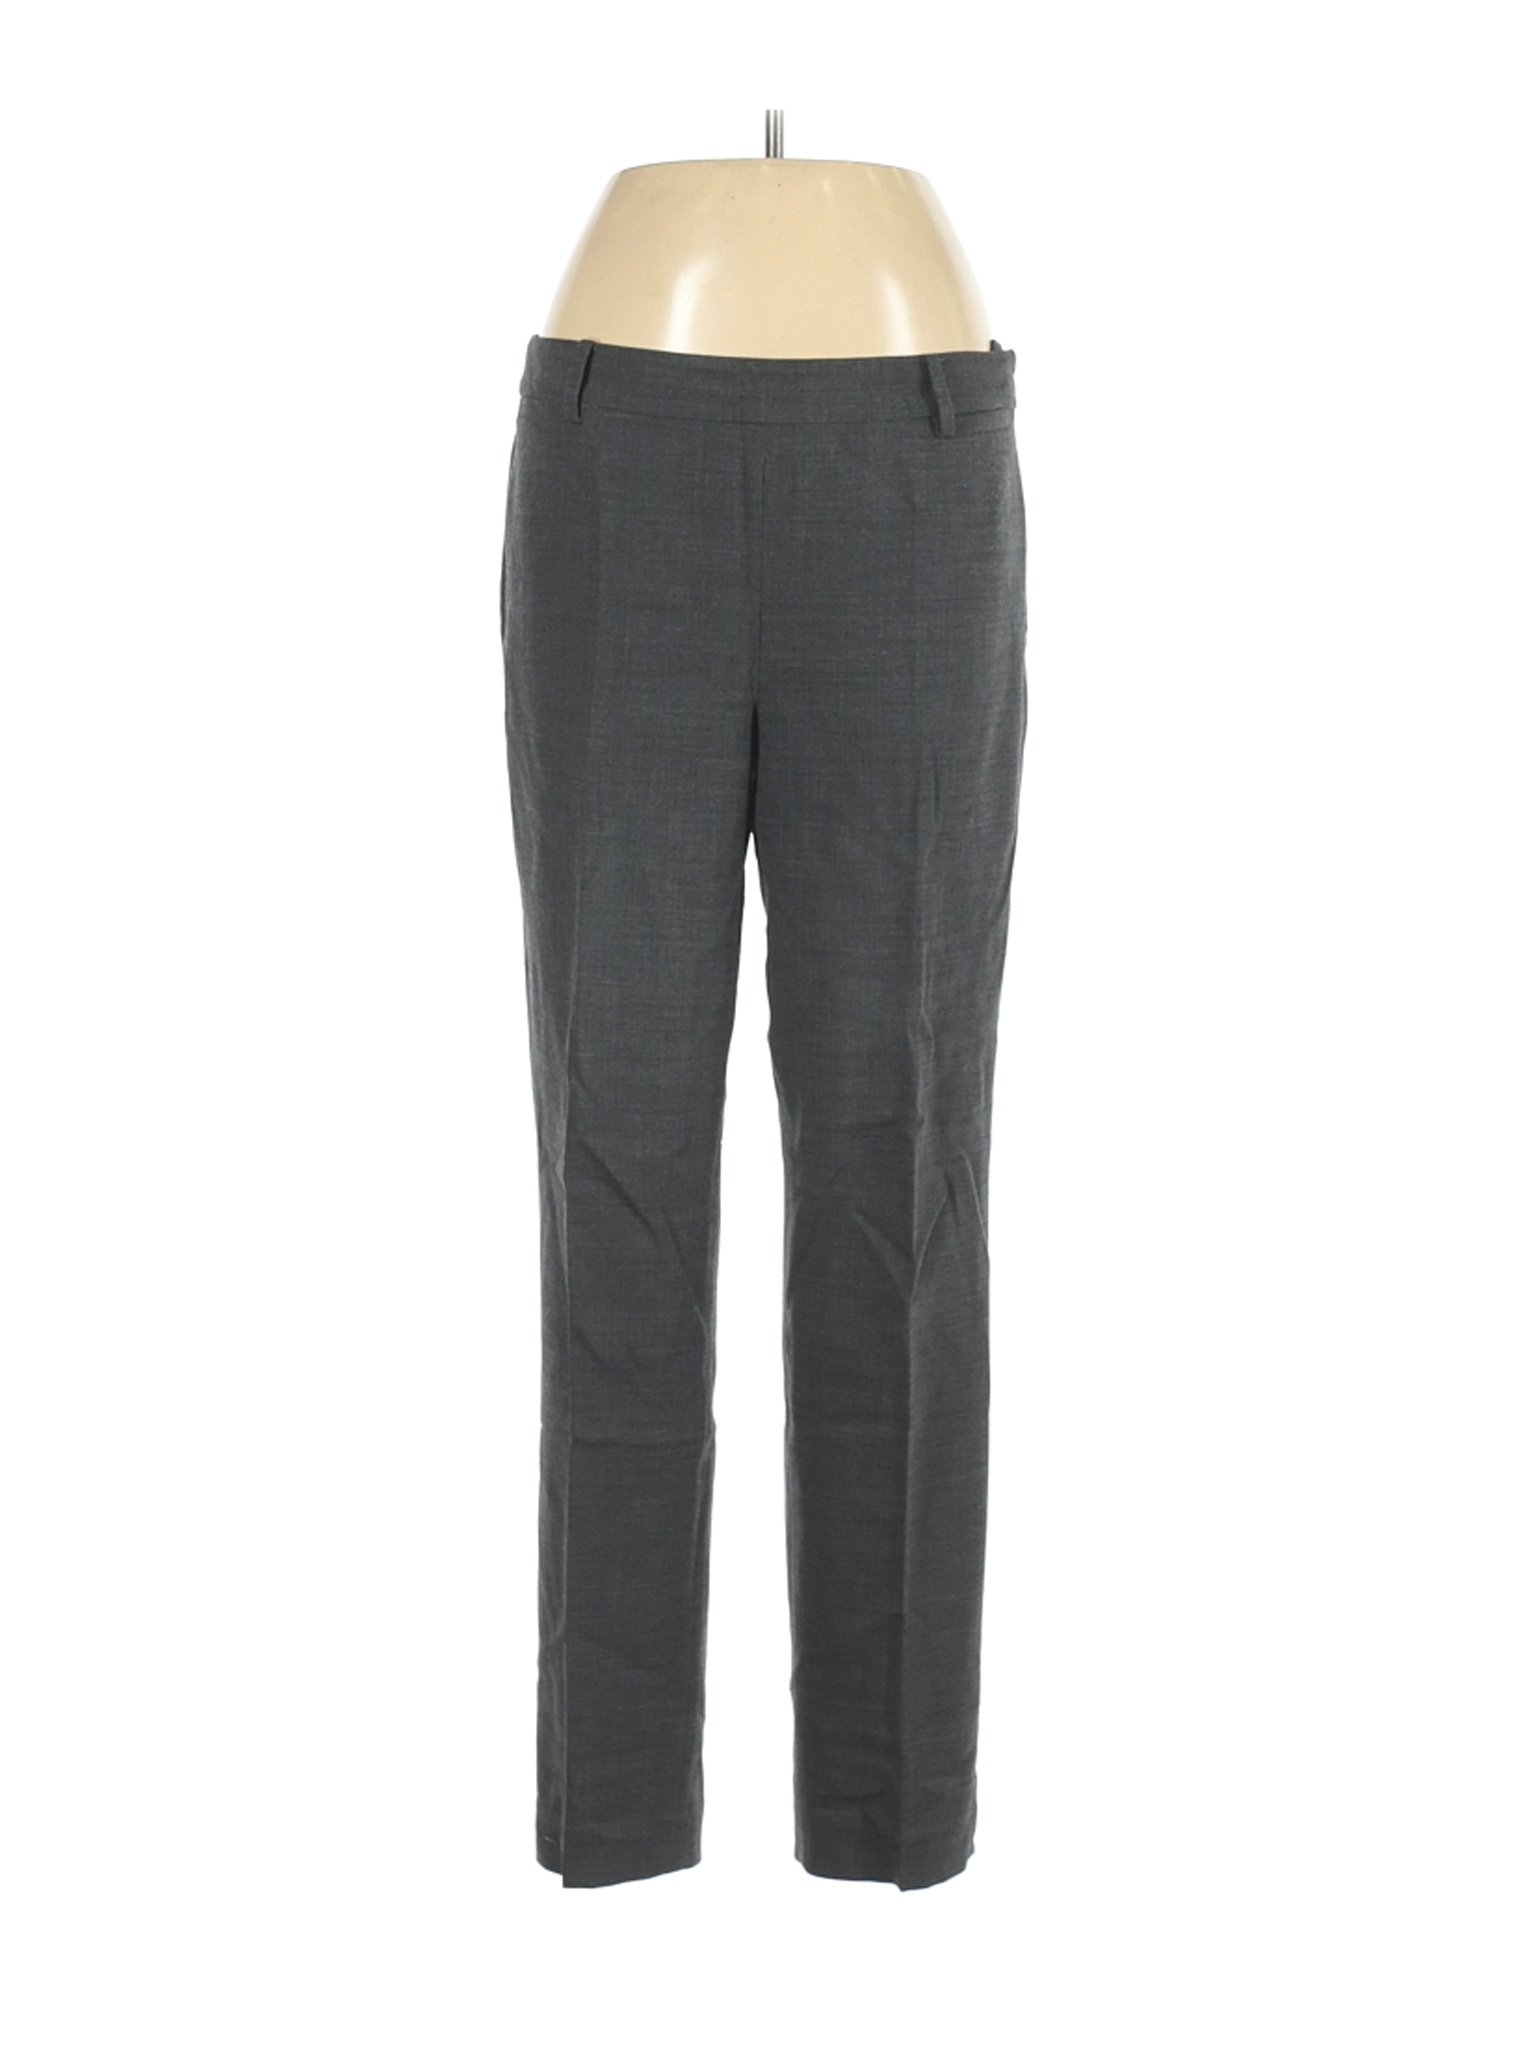 Talbots Women Gray Wool Pants 8 | eBay